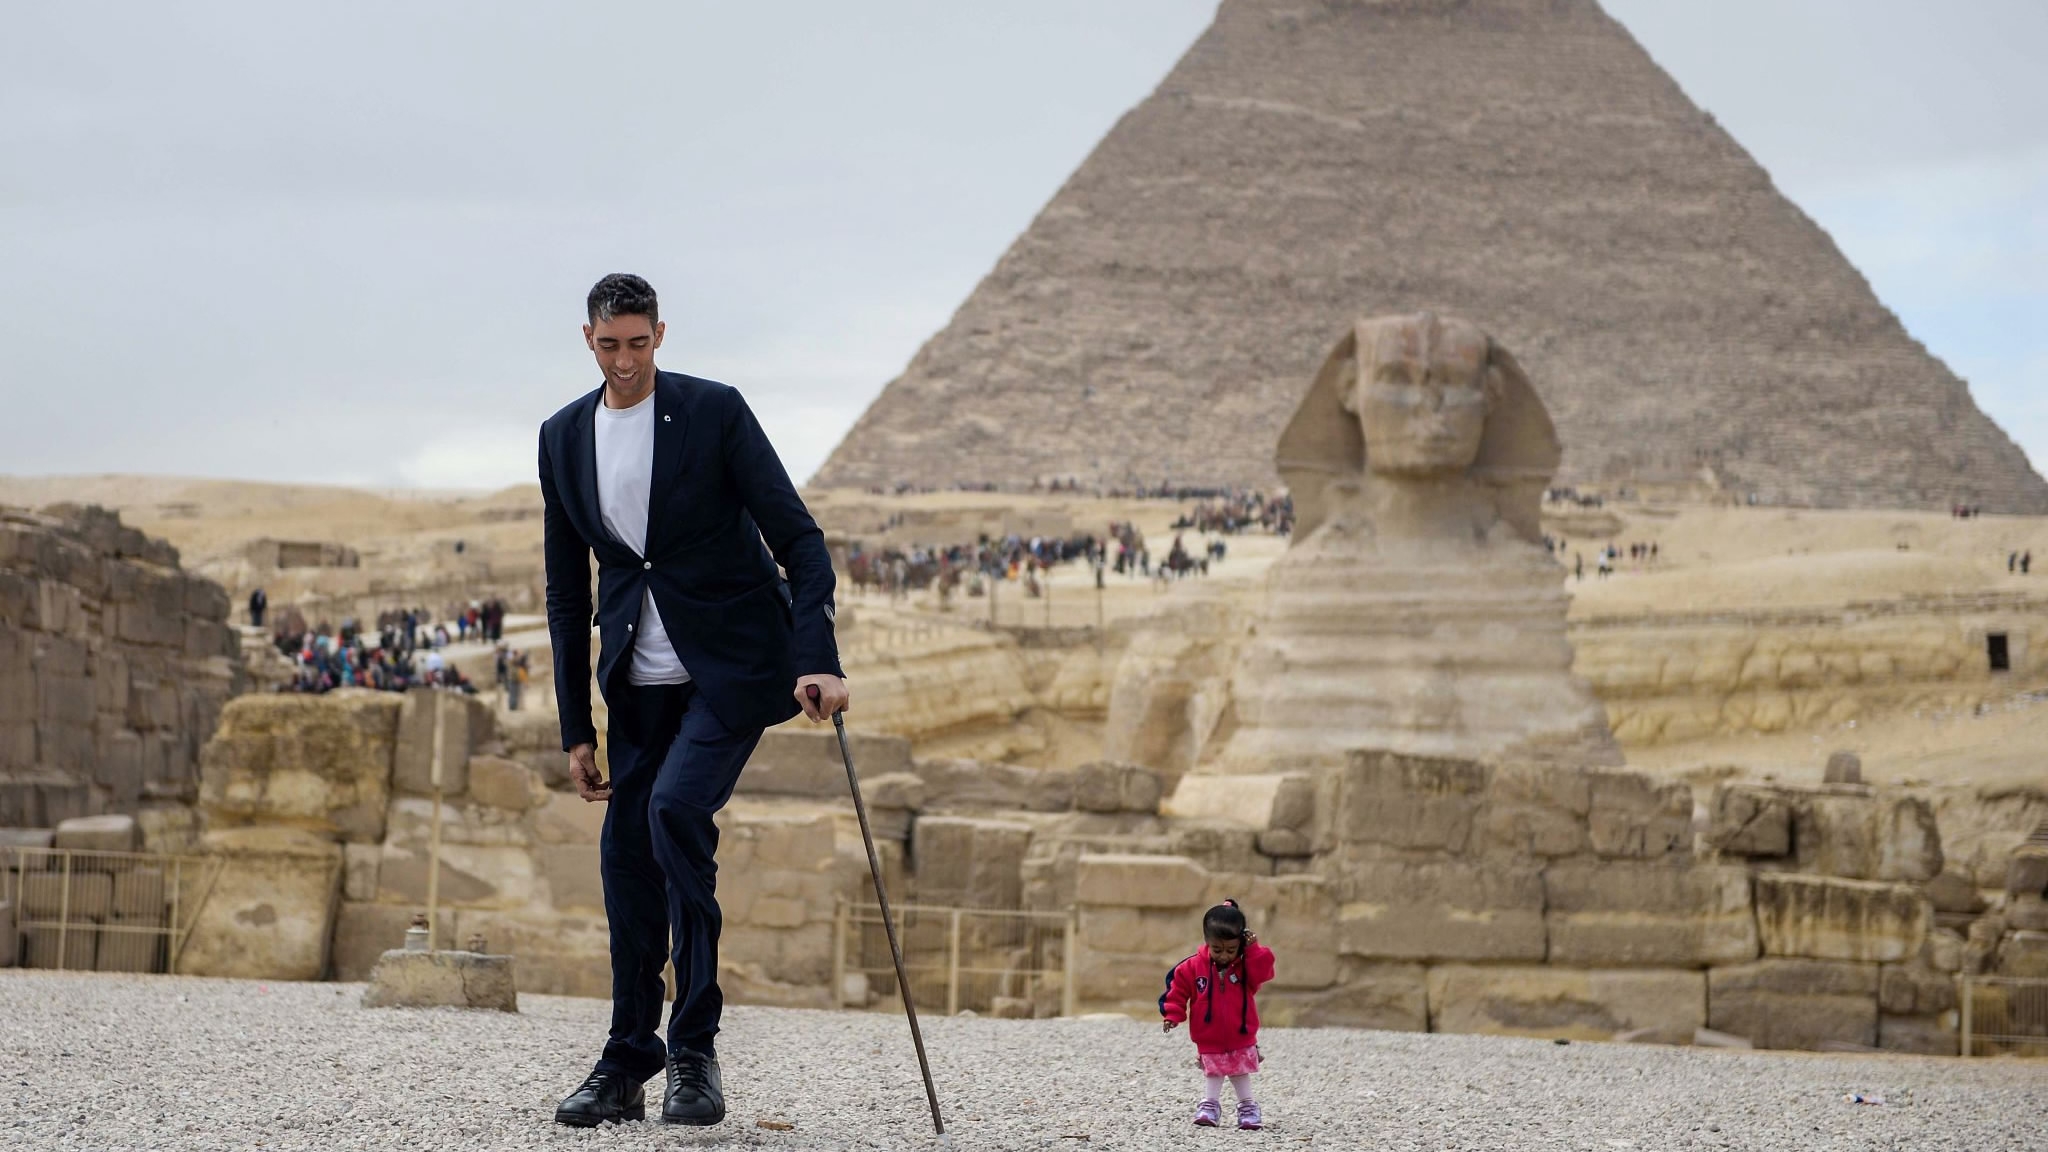 World S Tallest Man Meets World S Smallest Woman In Egypt Cgtn